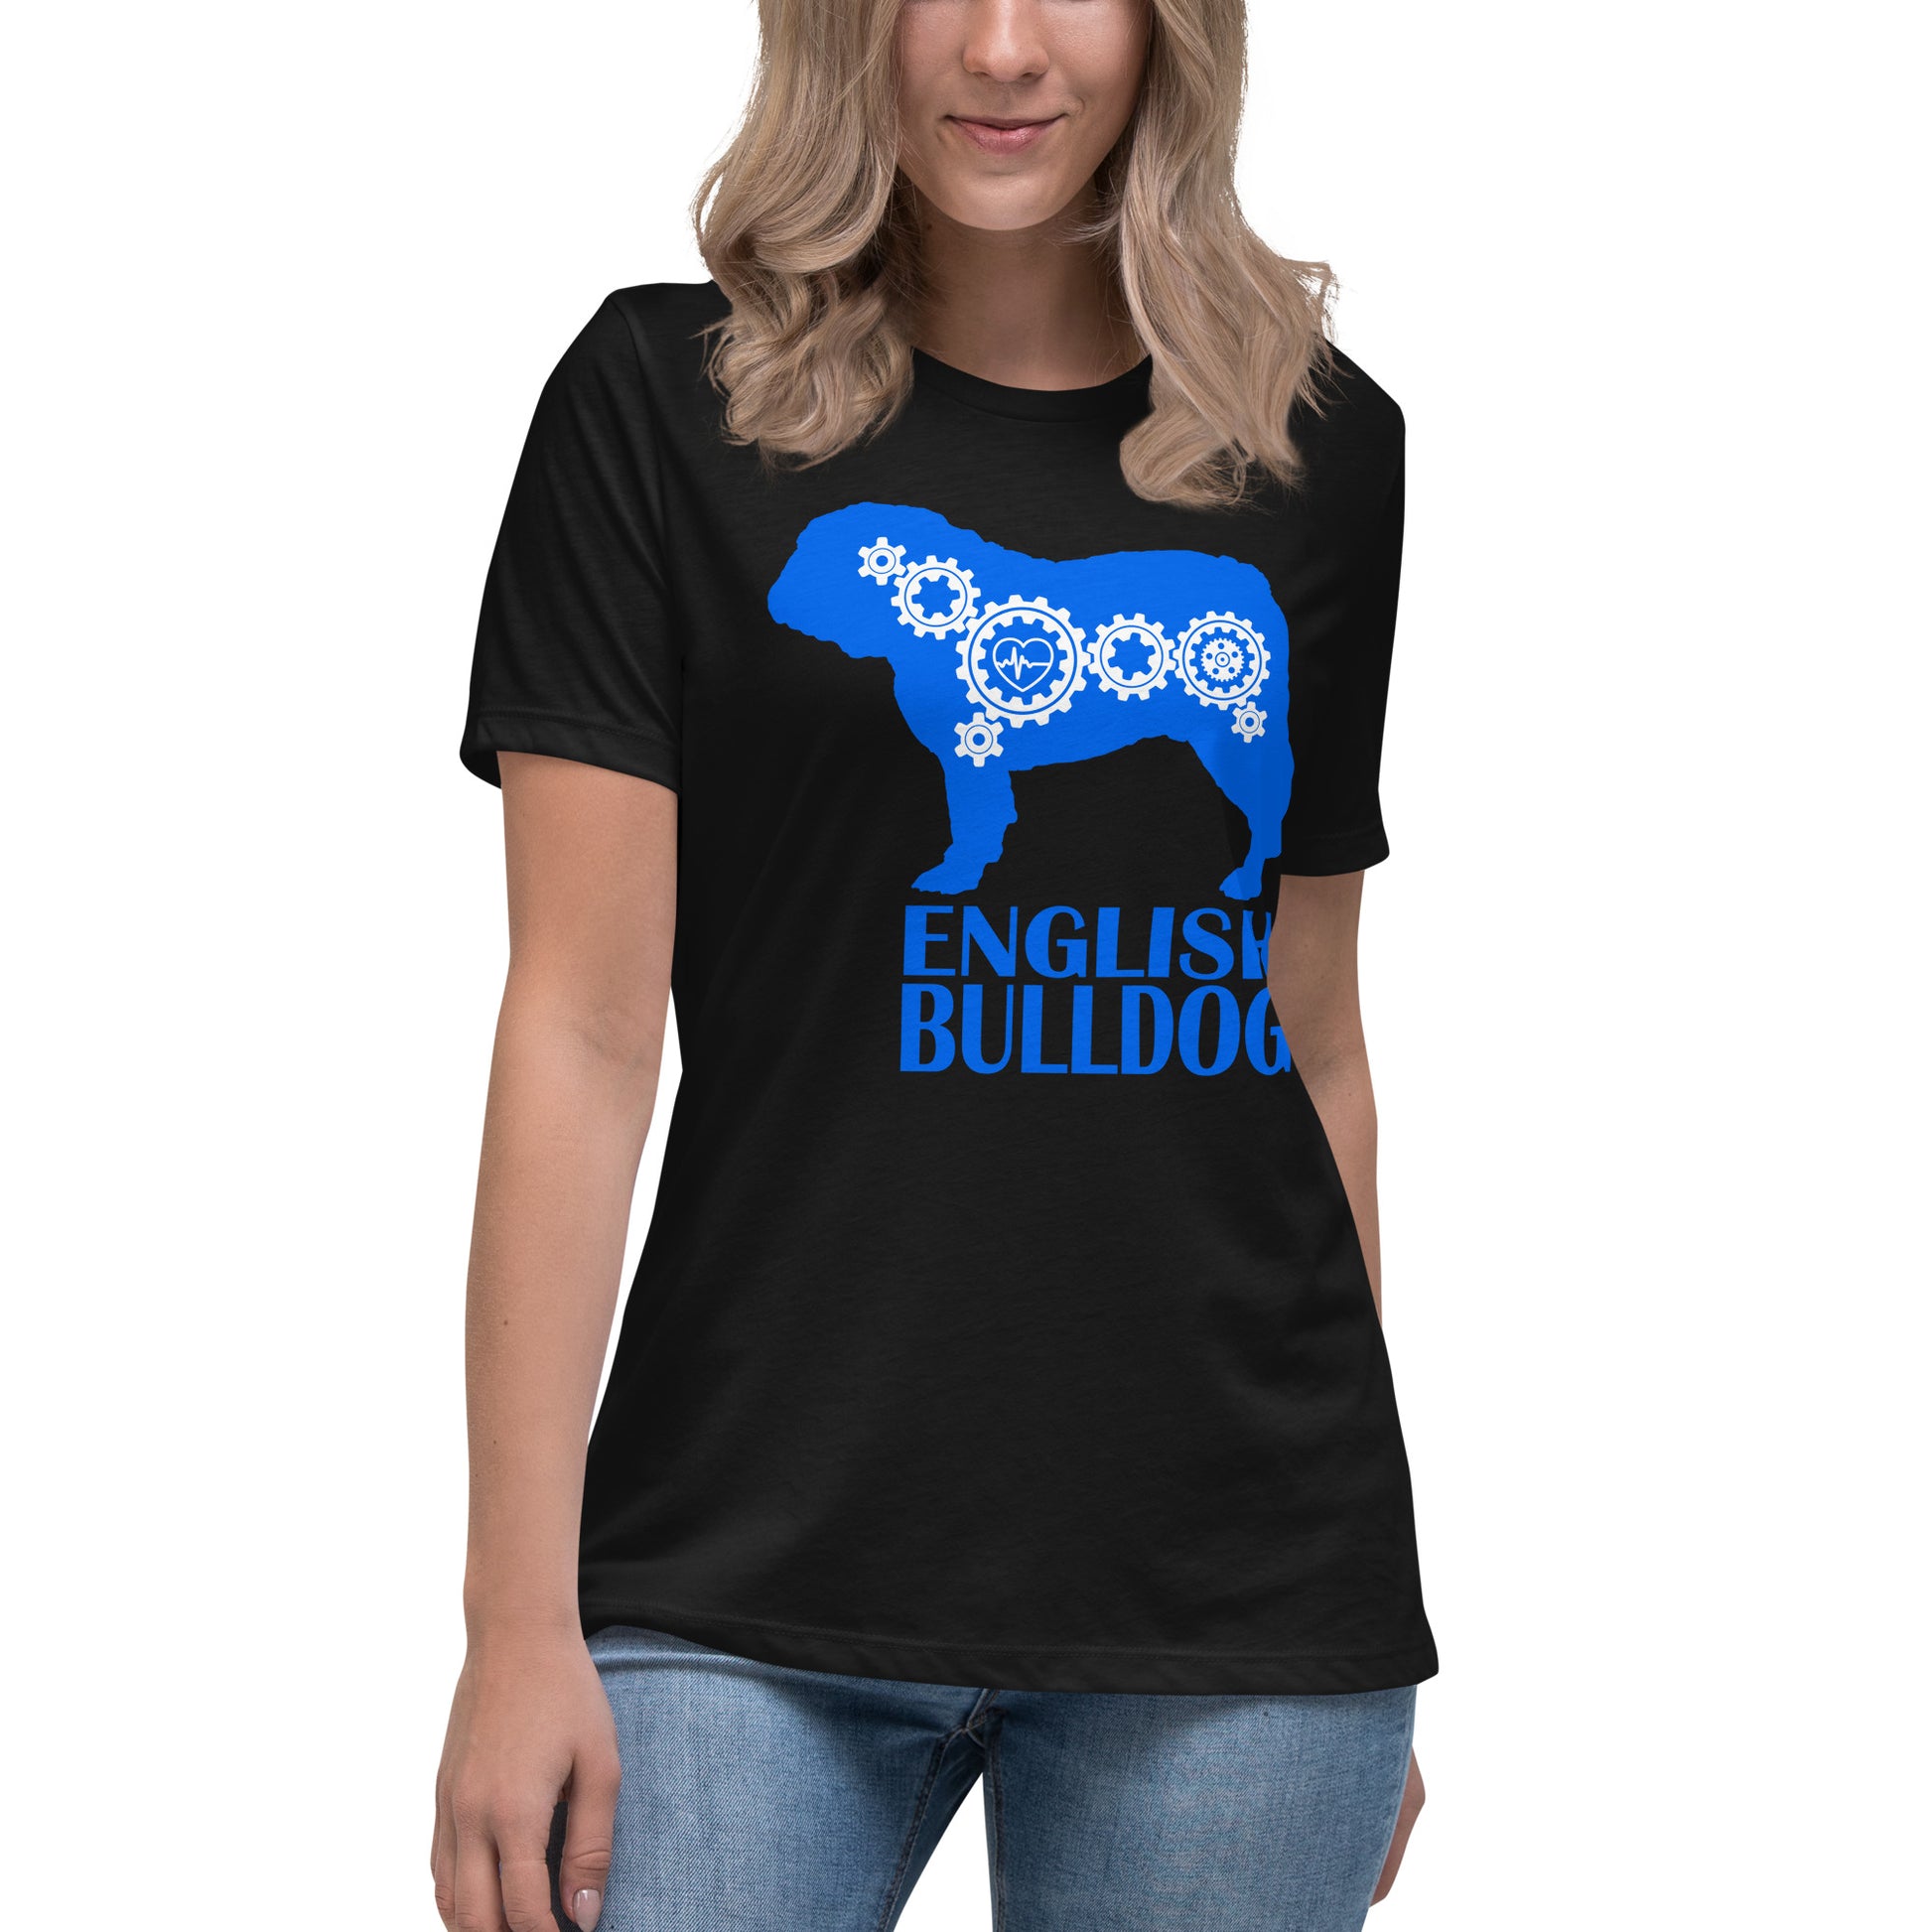 English Bulldog Bionic women’s black t-shirt by Dog Artistry.